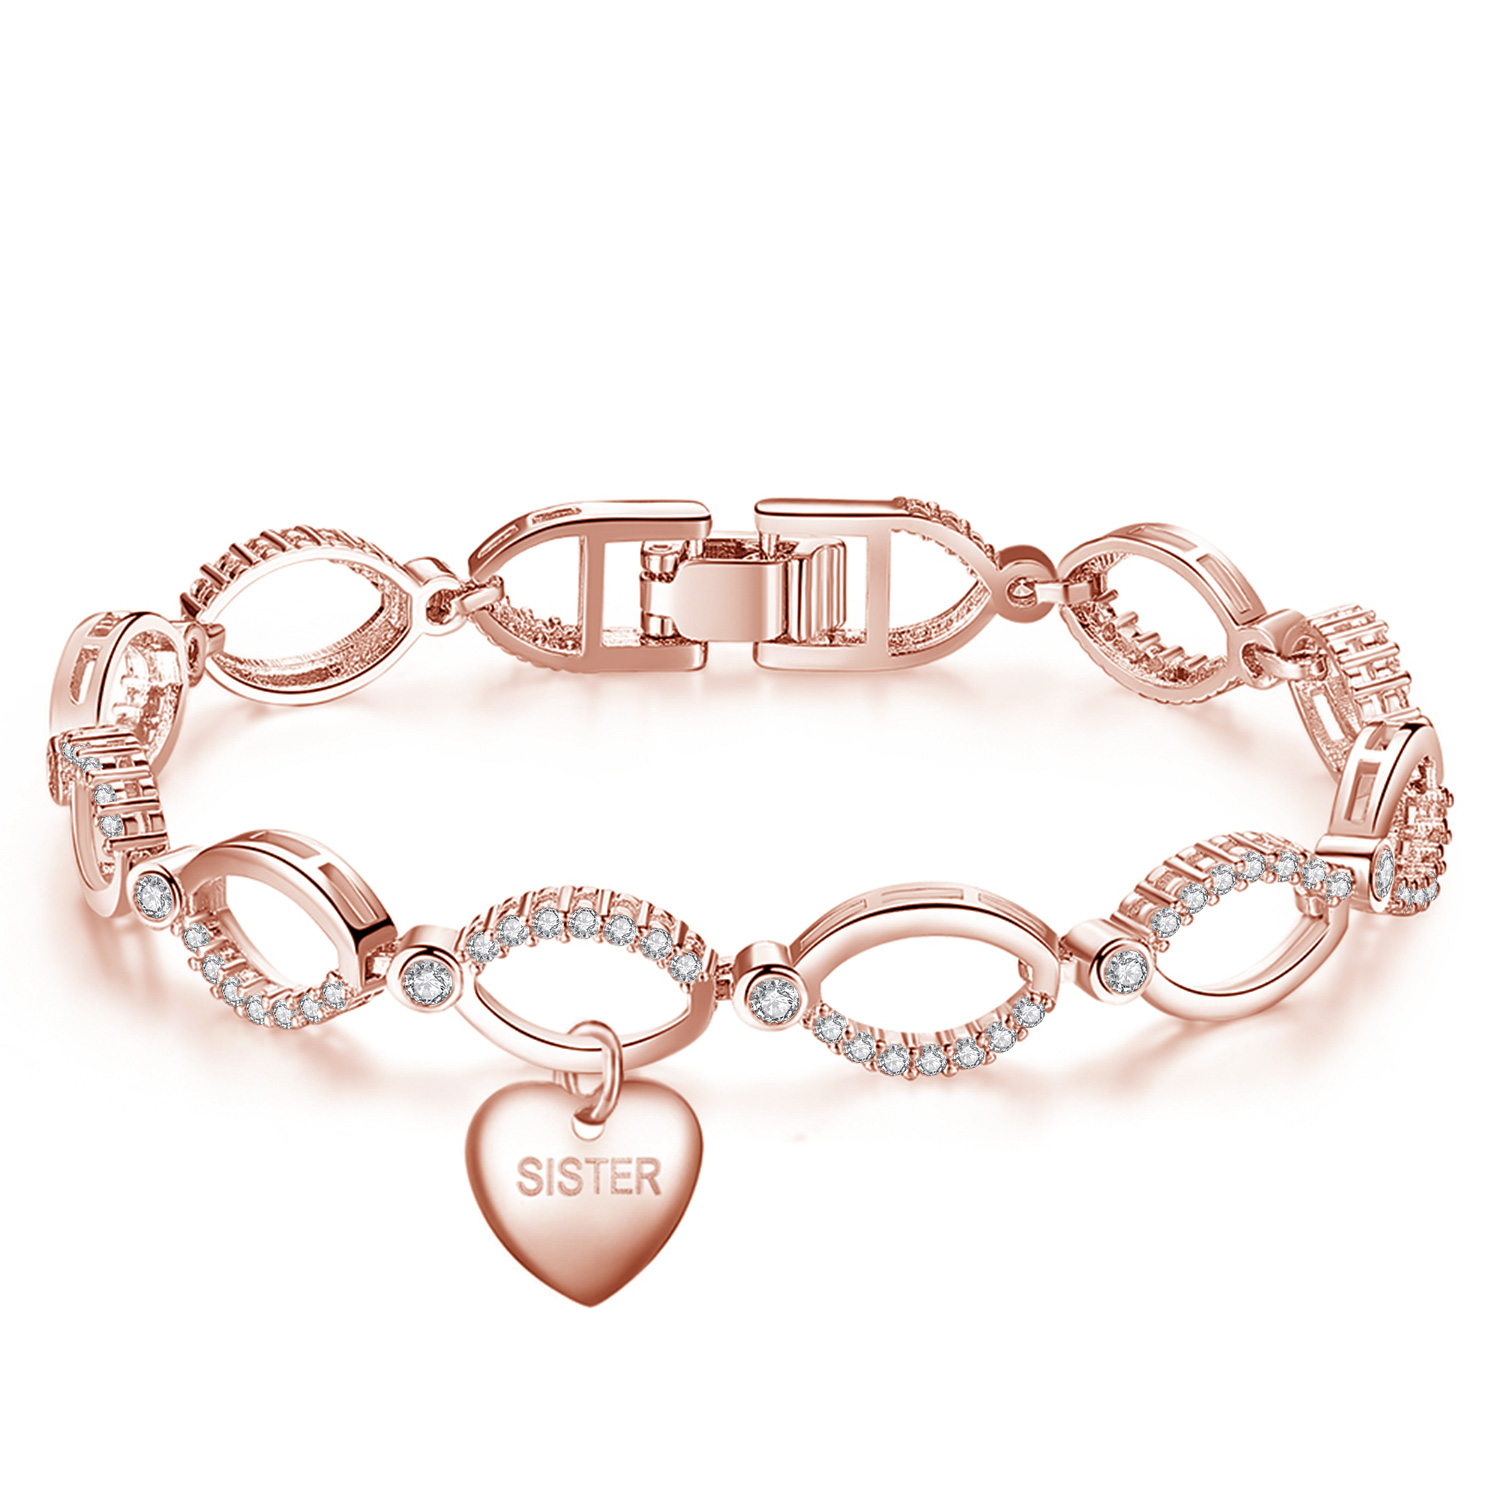 10pc_Rose Gold Multi-linked Infinity Bracelet with Premium Crystal and Sister Heart_UK seller_GSVB061-Rose gold Sister